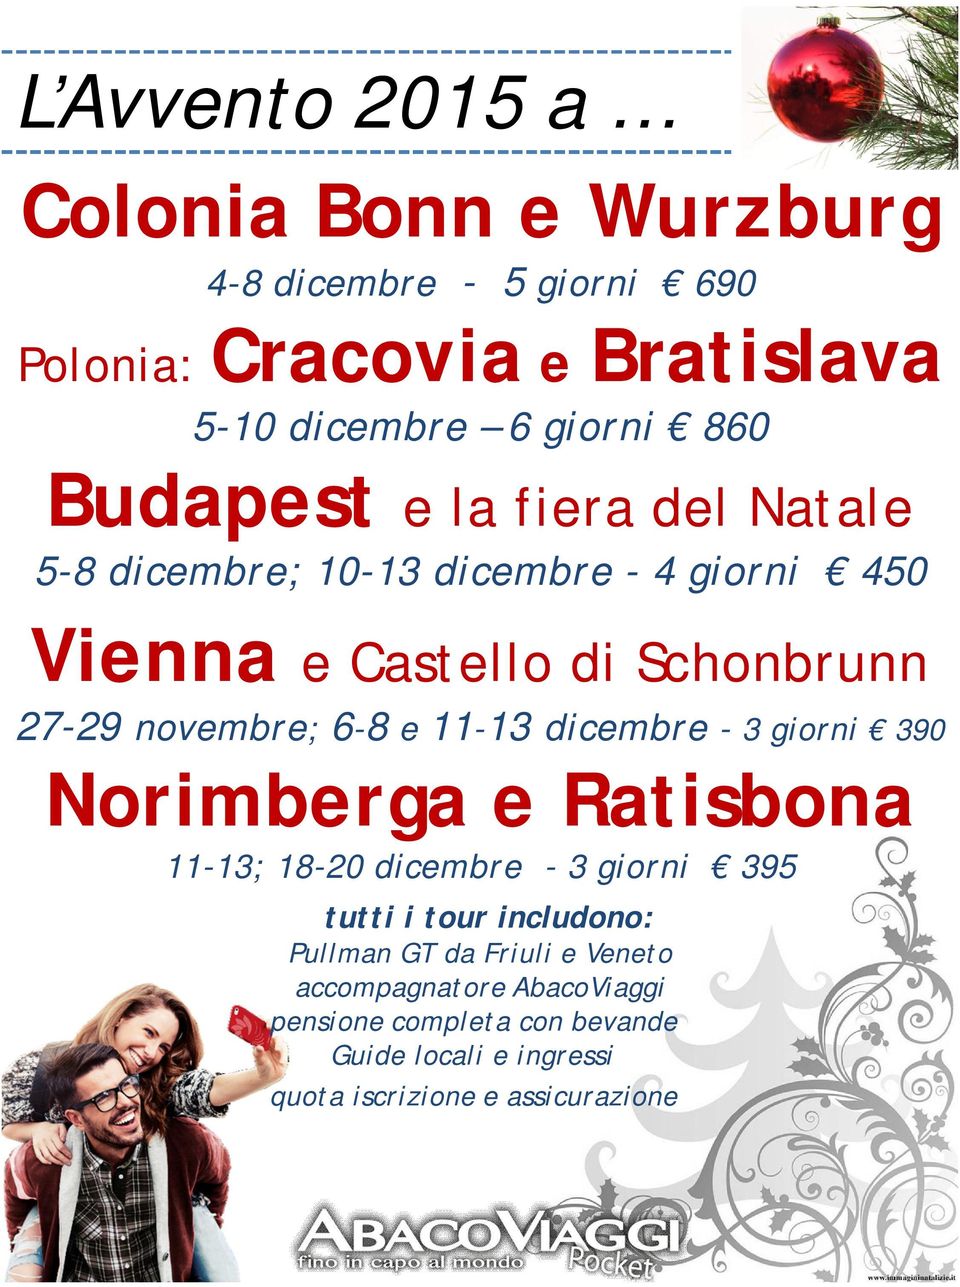 Castello di Schonbrunn 27-29 novembre; 6-8 e 11-13 dicembre - 3 giorni 390 Norimberga e Ratisbona 11-13;